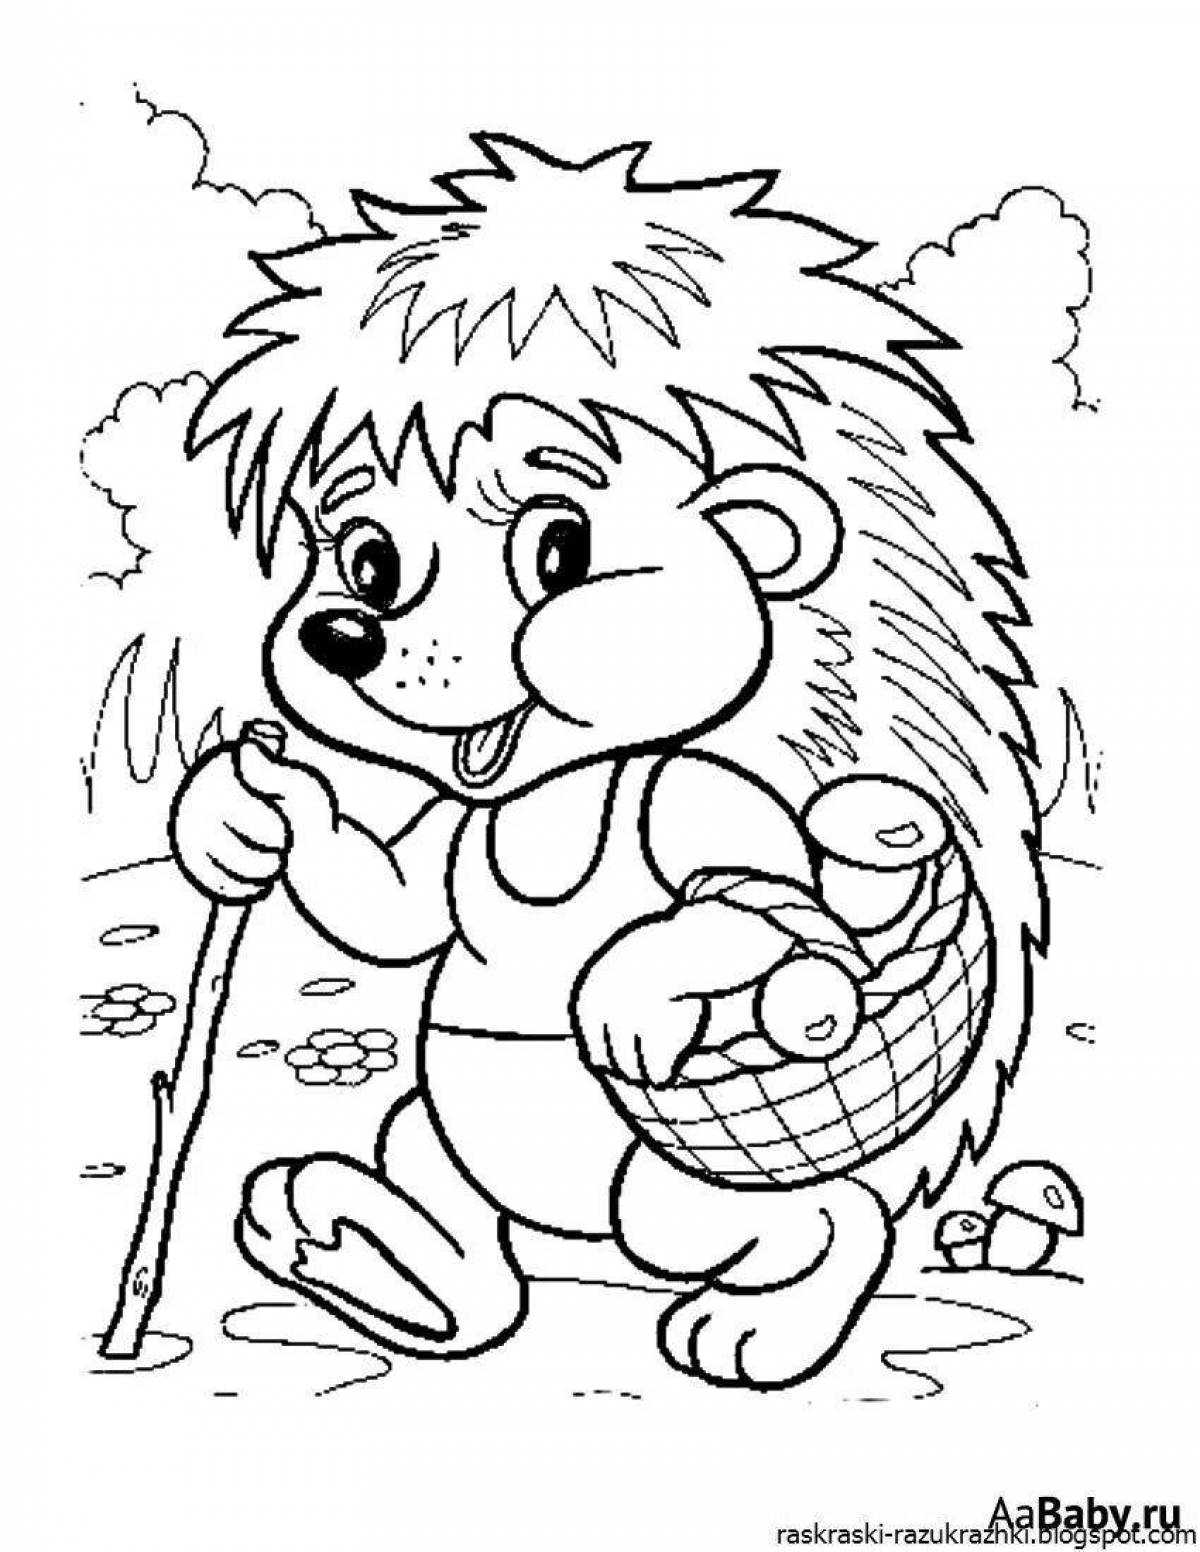 Color-overload hedgehog coloring page for kids